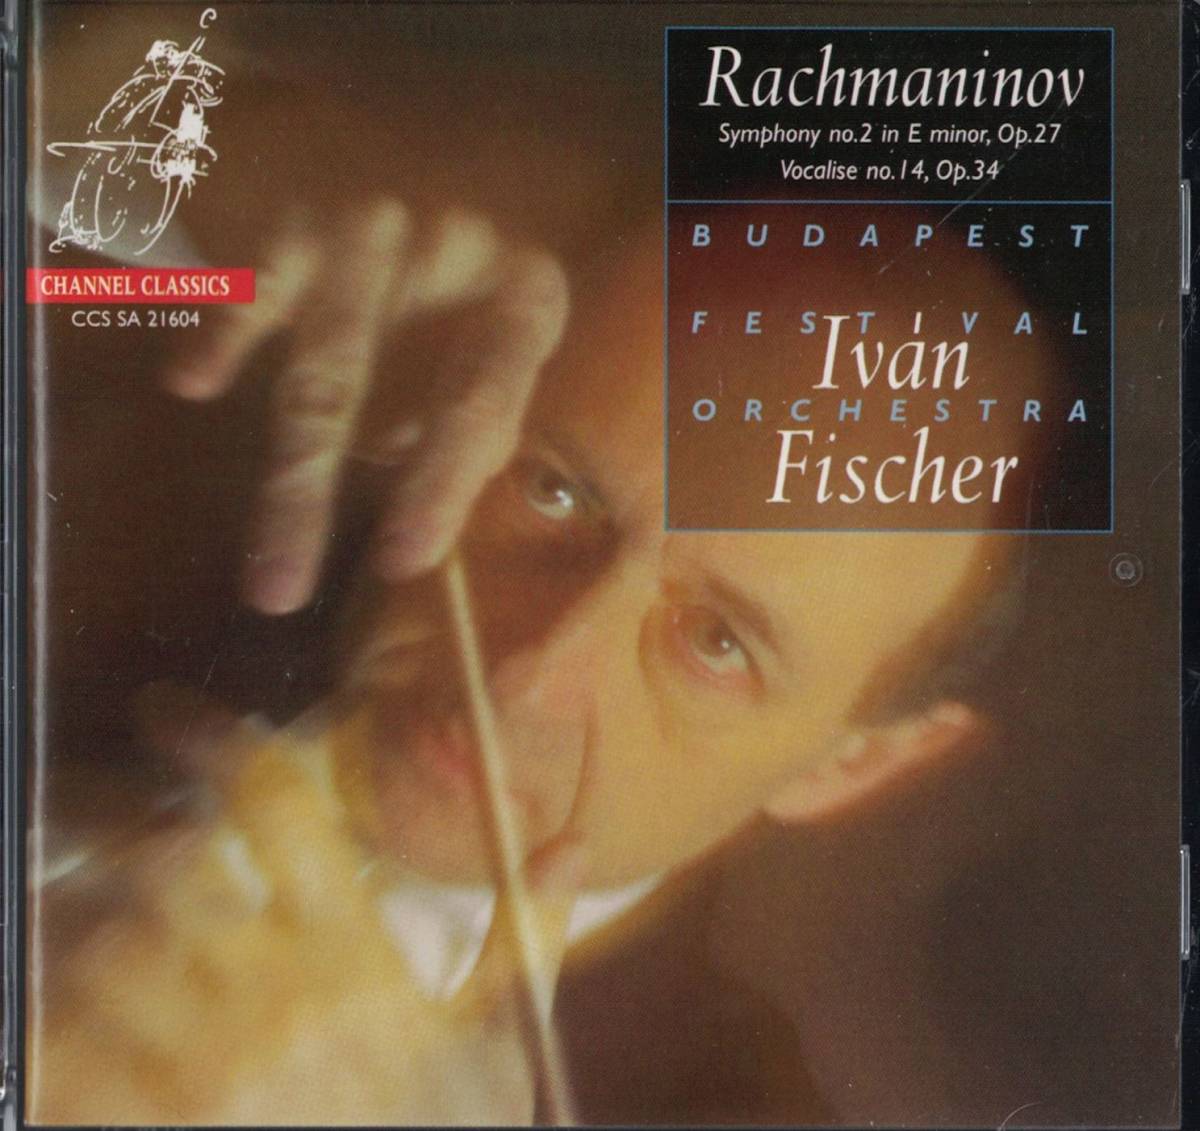 Budapest Festival Orchestra, Ivan Fischer - Rachmaninoff: Symphony